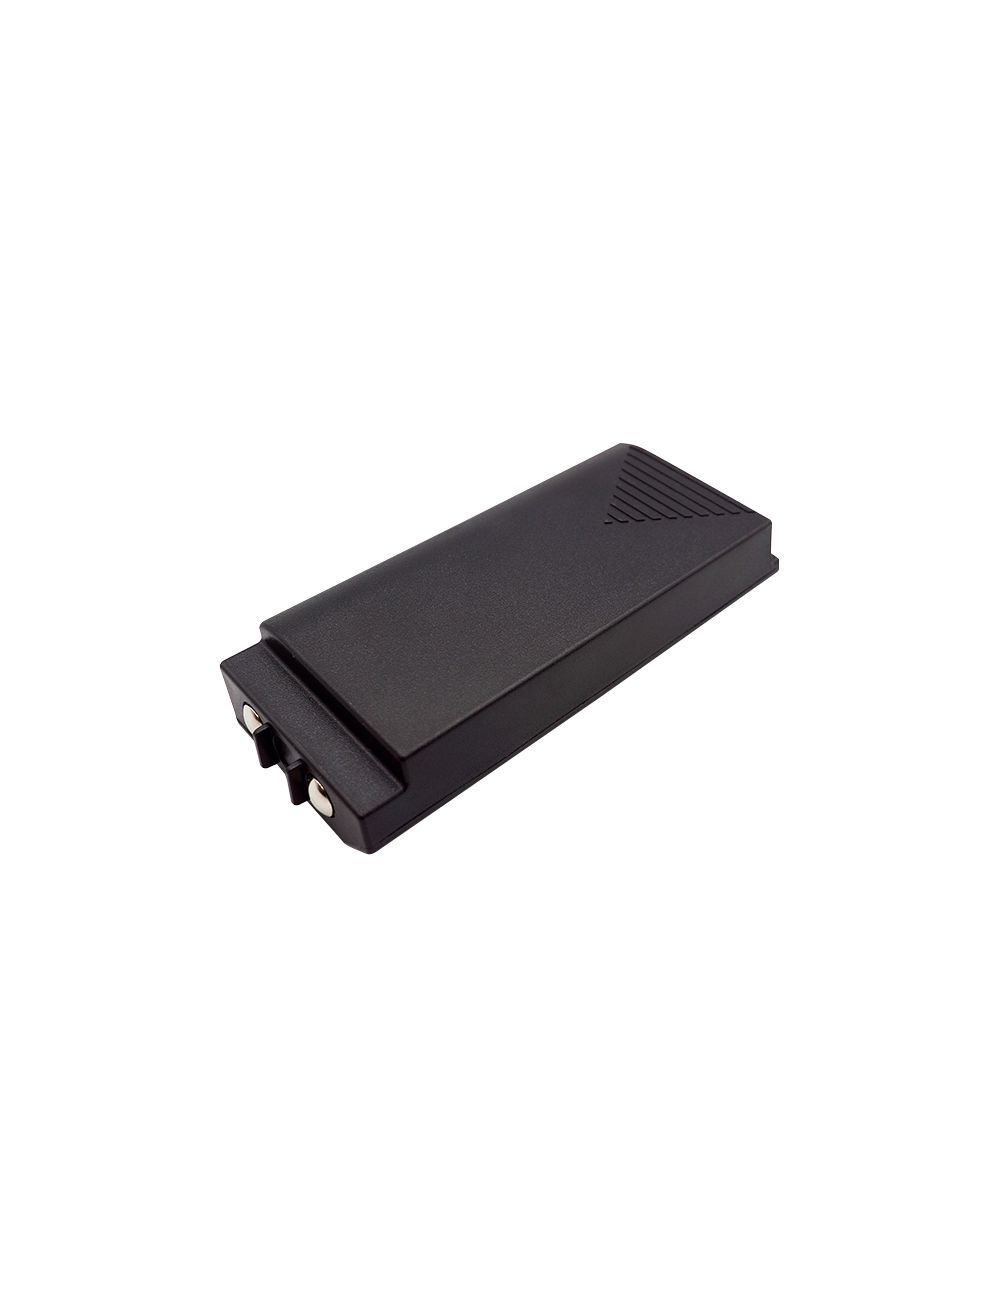 Bateria compatível para Hiab XS Drive, XS Drive H3786692, XS Drive H3796692. HIA7220 7,2V 2000mAh - 1